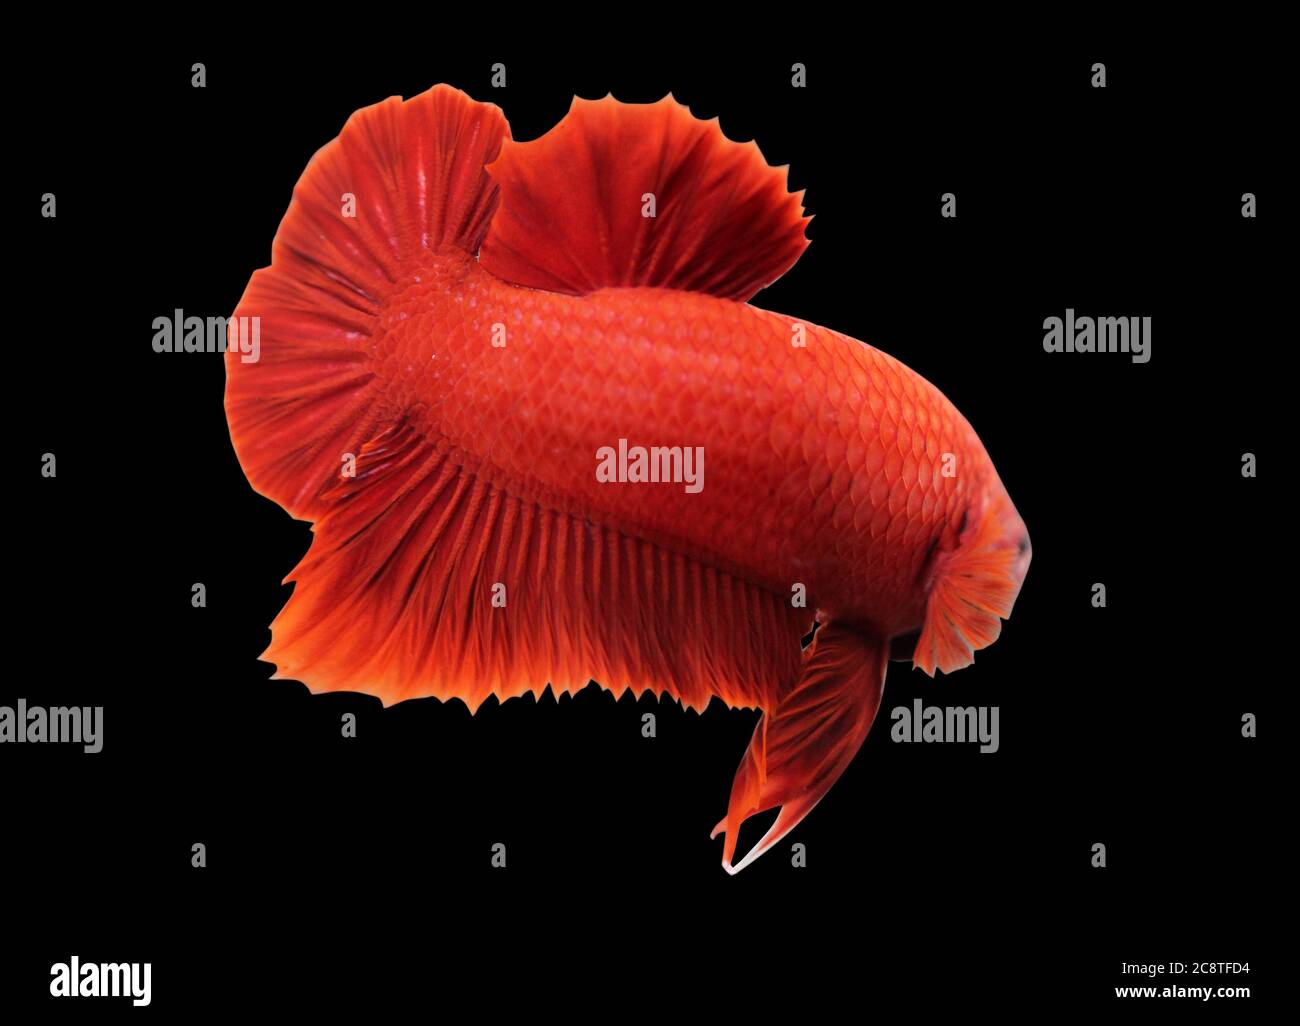 Betta Super Red HMPK Halfmoon plakat Male or Plakat Fighting Fish Splendens on Black Background. Stock Photo